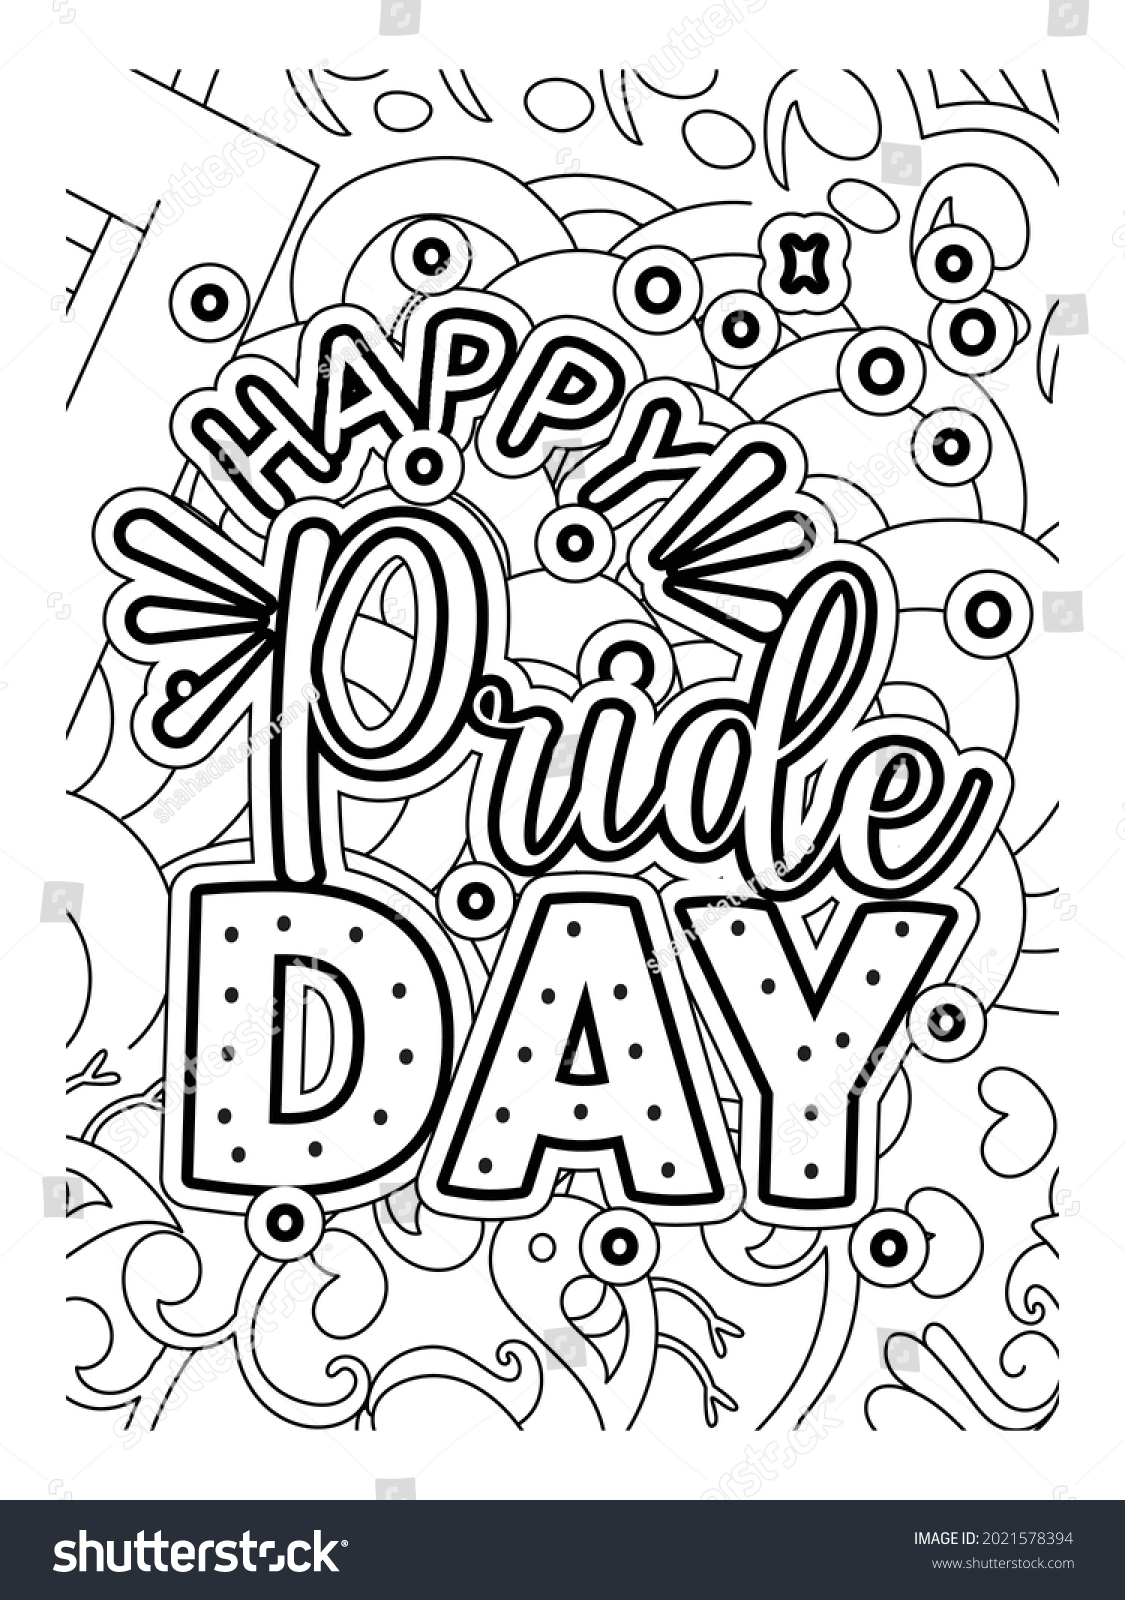 Happy pride day coloring page designmotivational stock vector royalty free